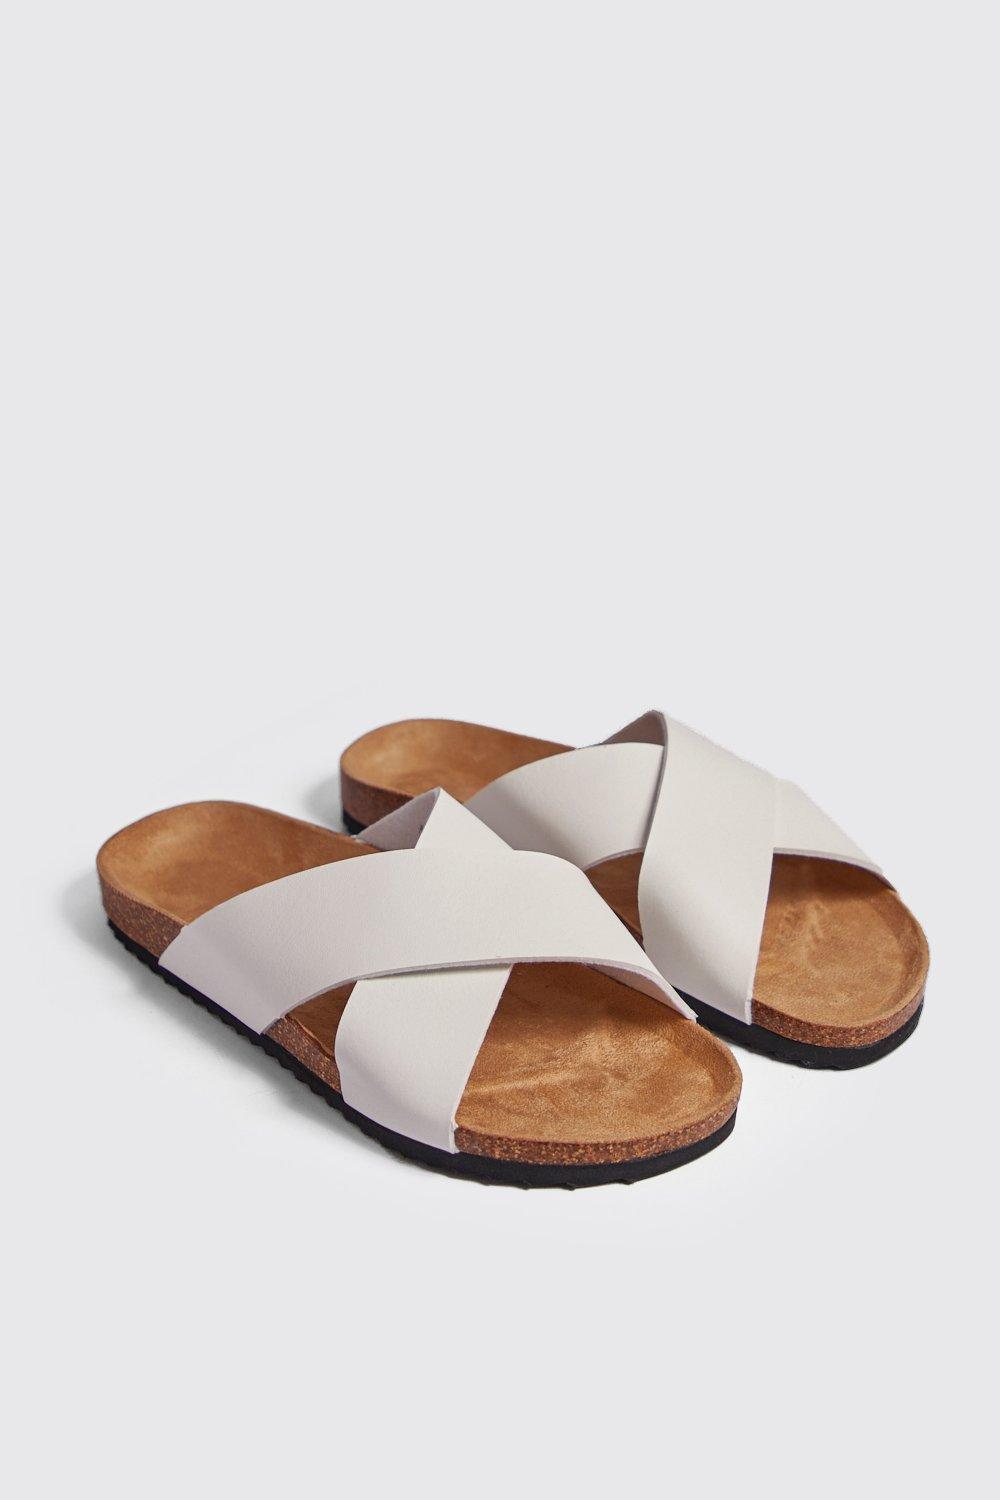 white double strap sandals